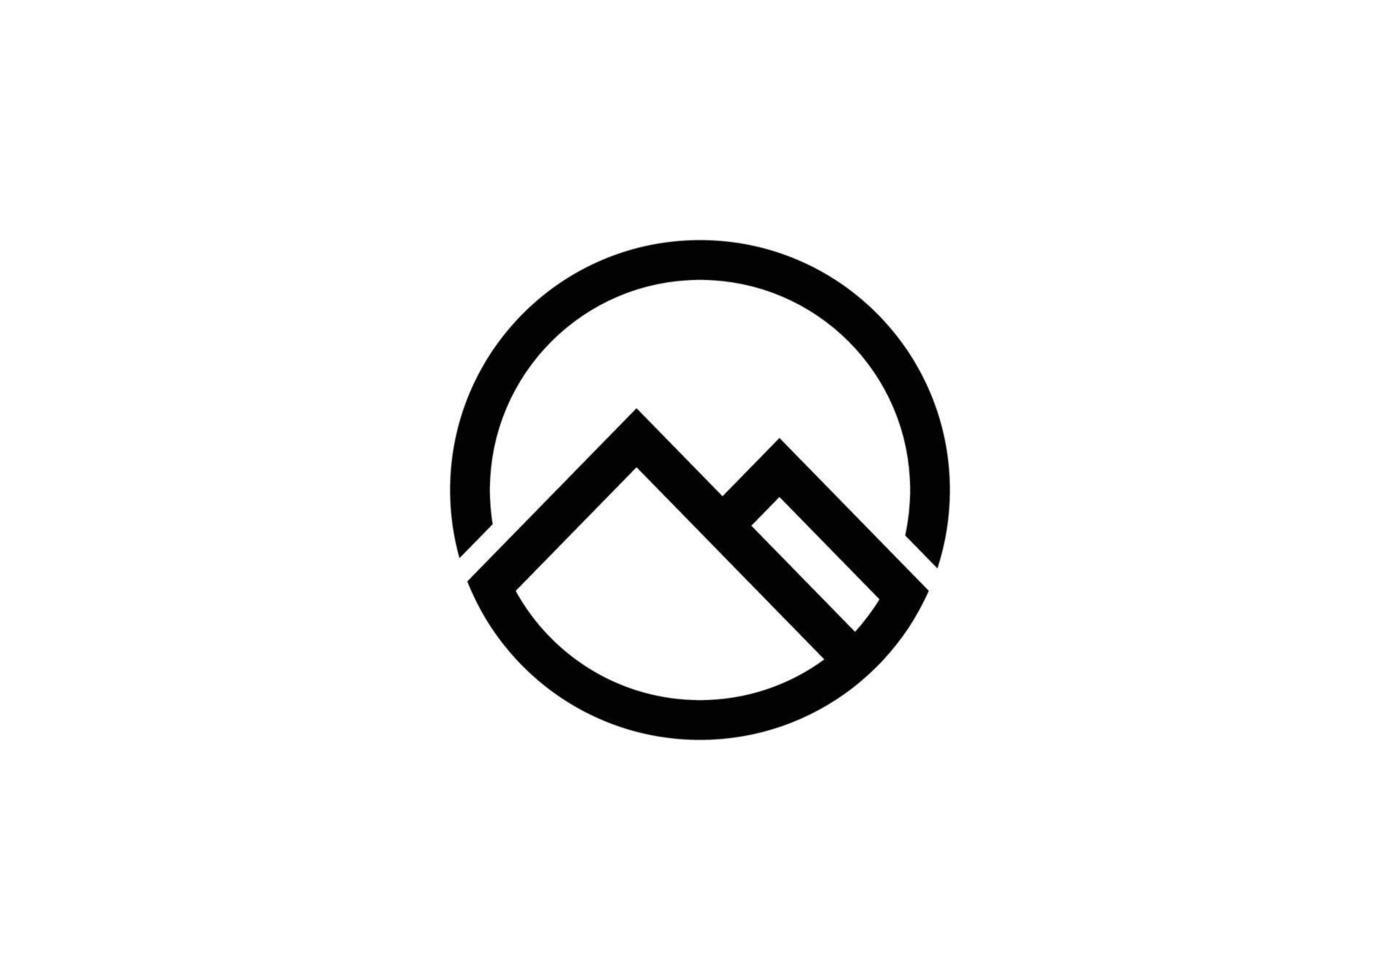 symbol icon mountain or initial M. Logo Template Design inspiration vector